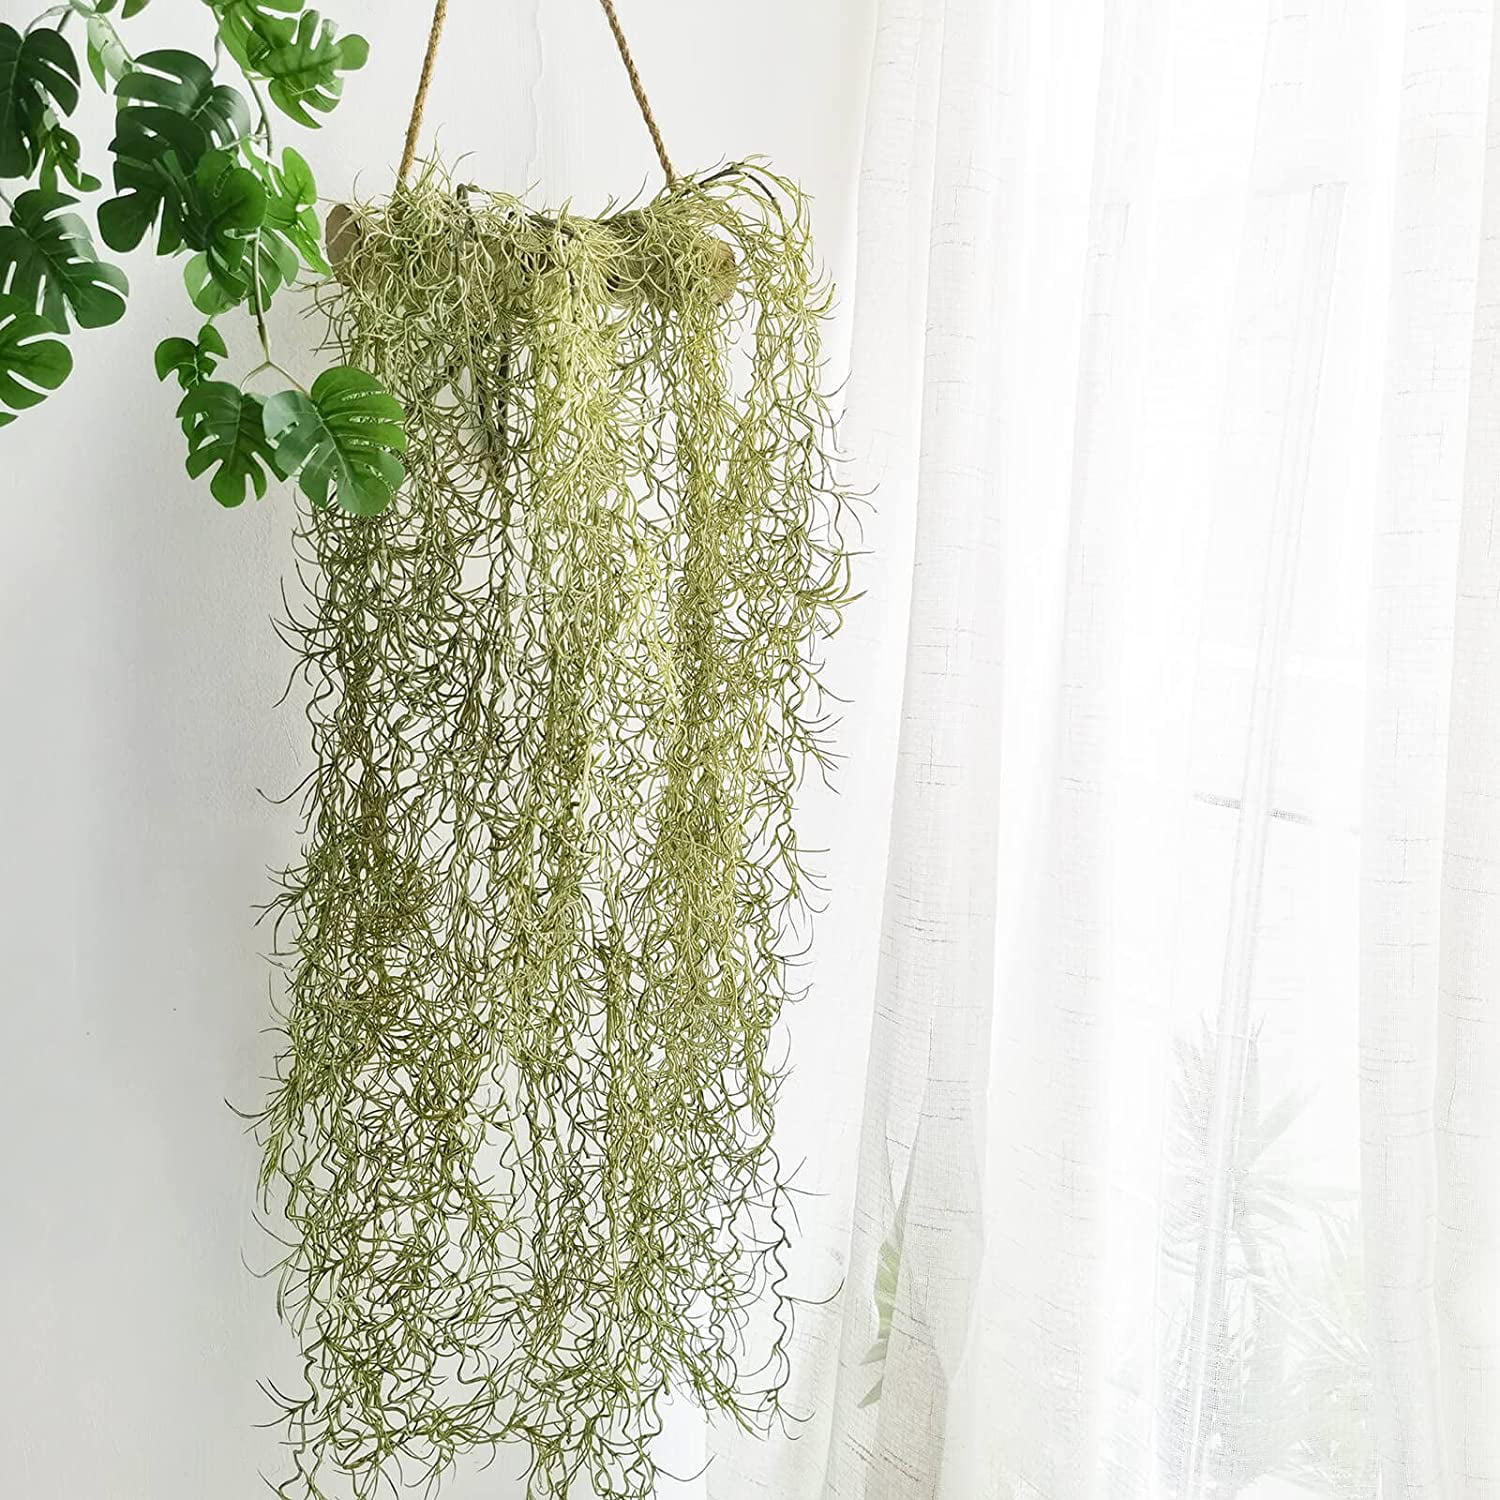 2 Pcs Artificial Hanging Plants Fake Spanish Moss, Faux Spanish